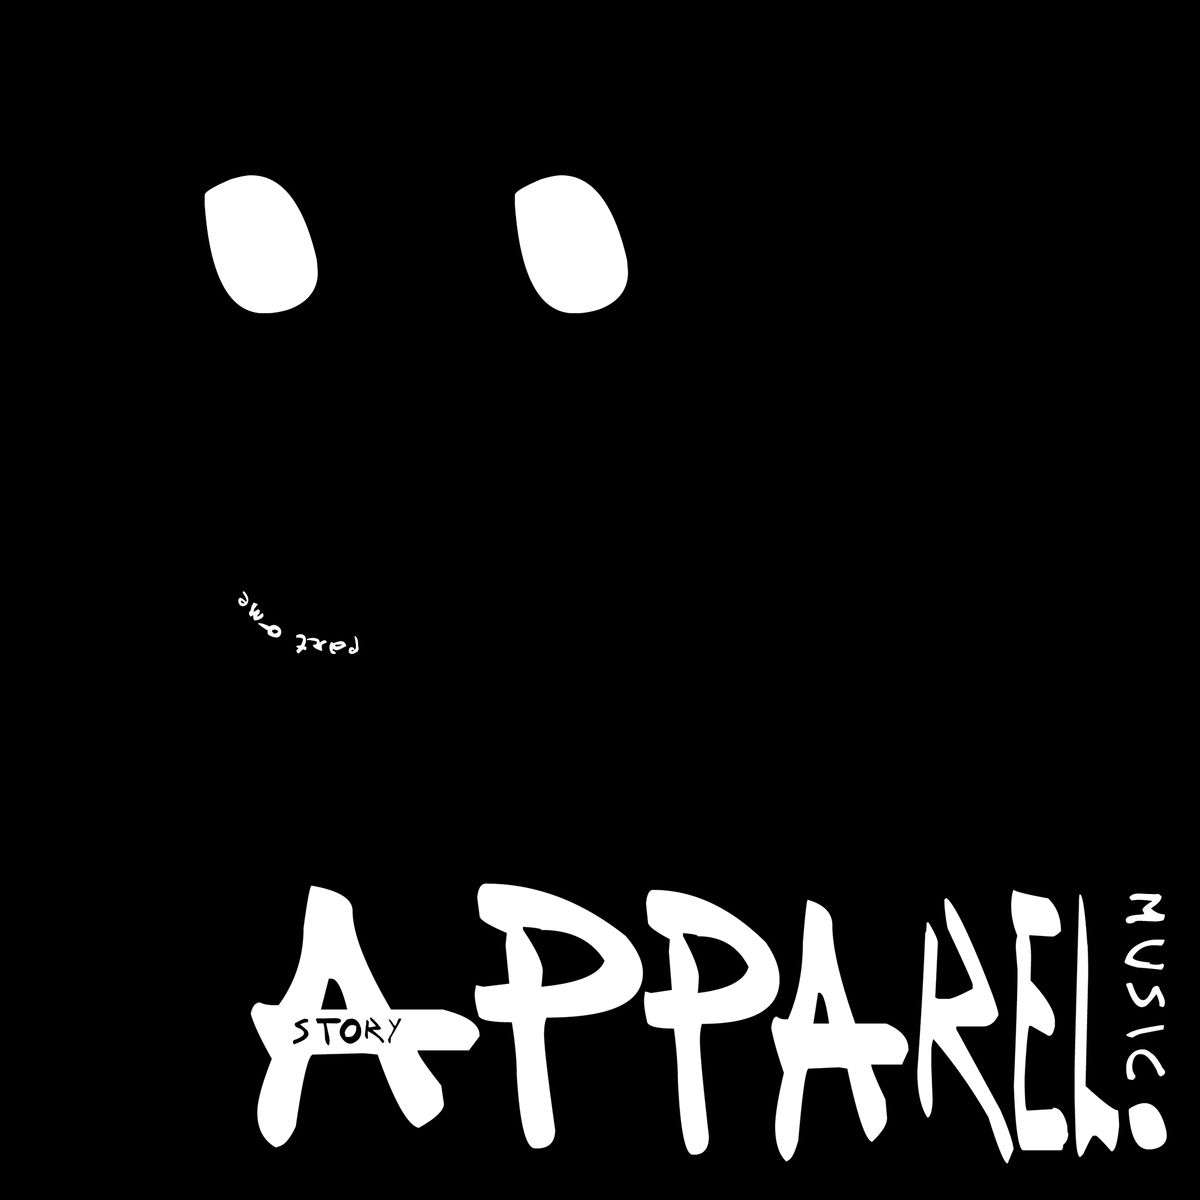 VA - Apparel Story (Part One) / Apparel Music